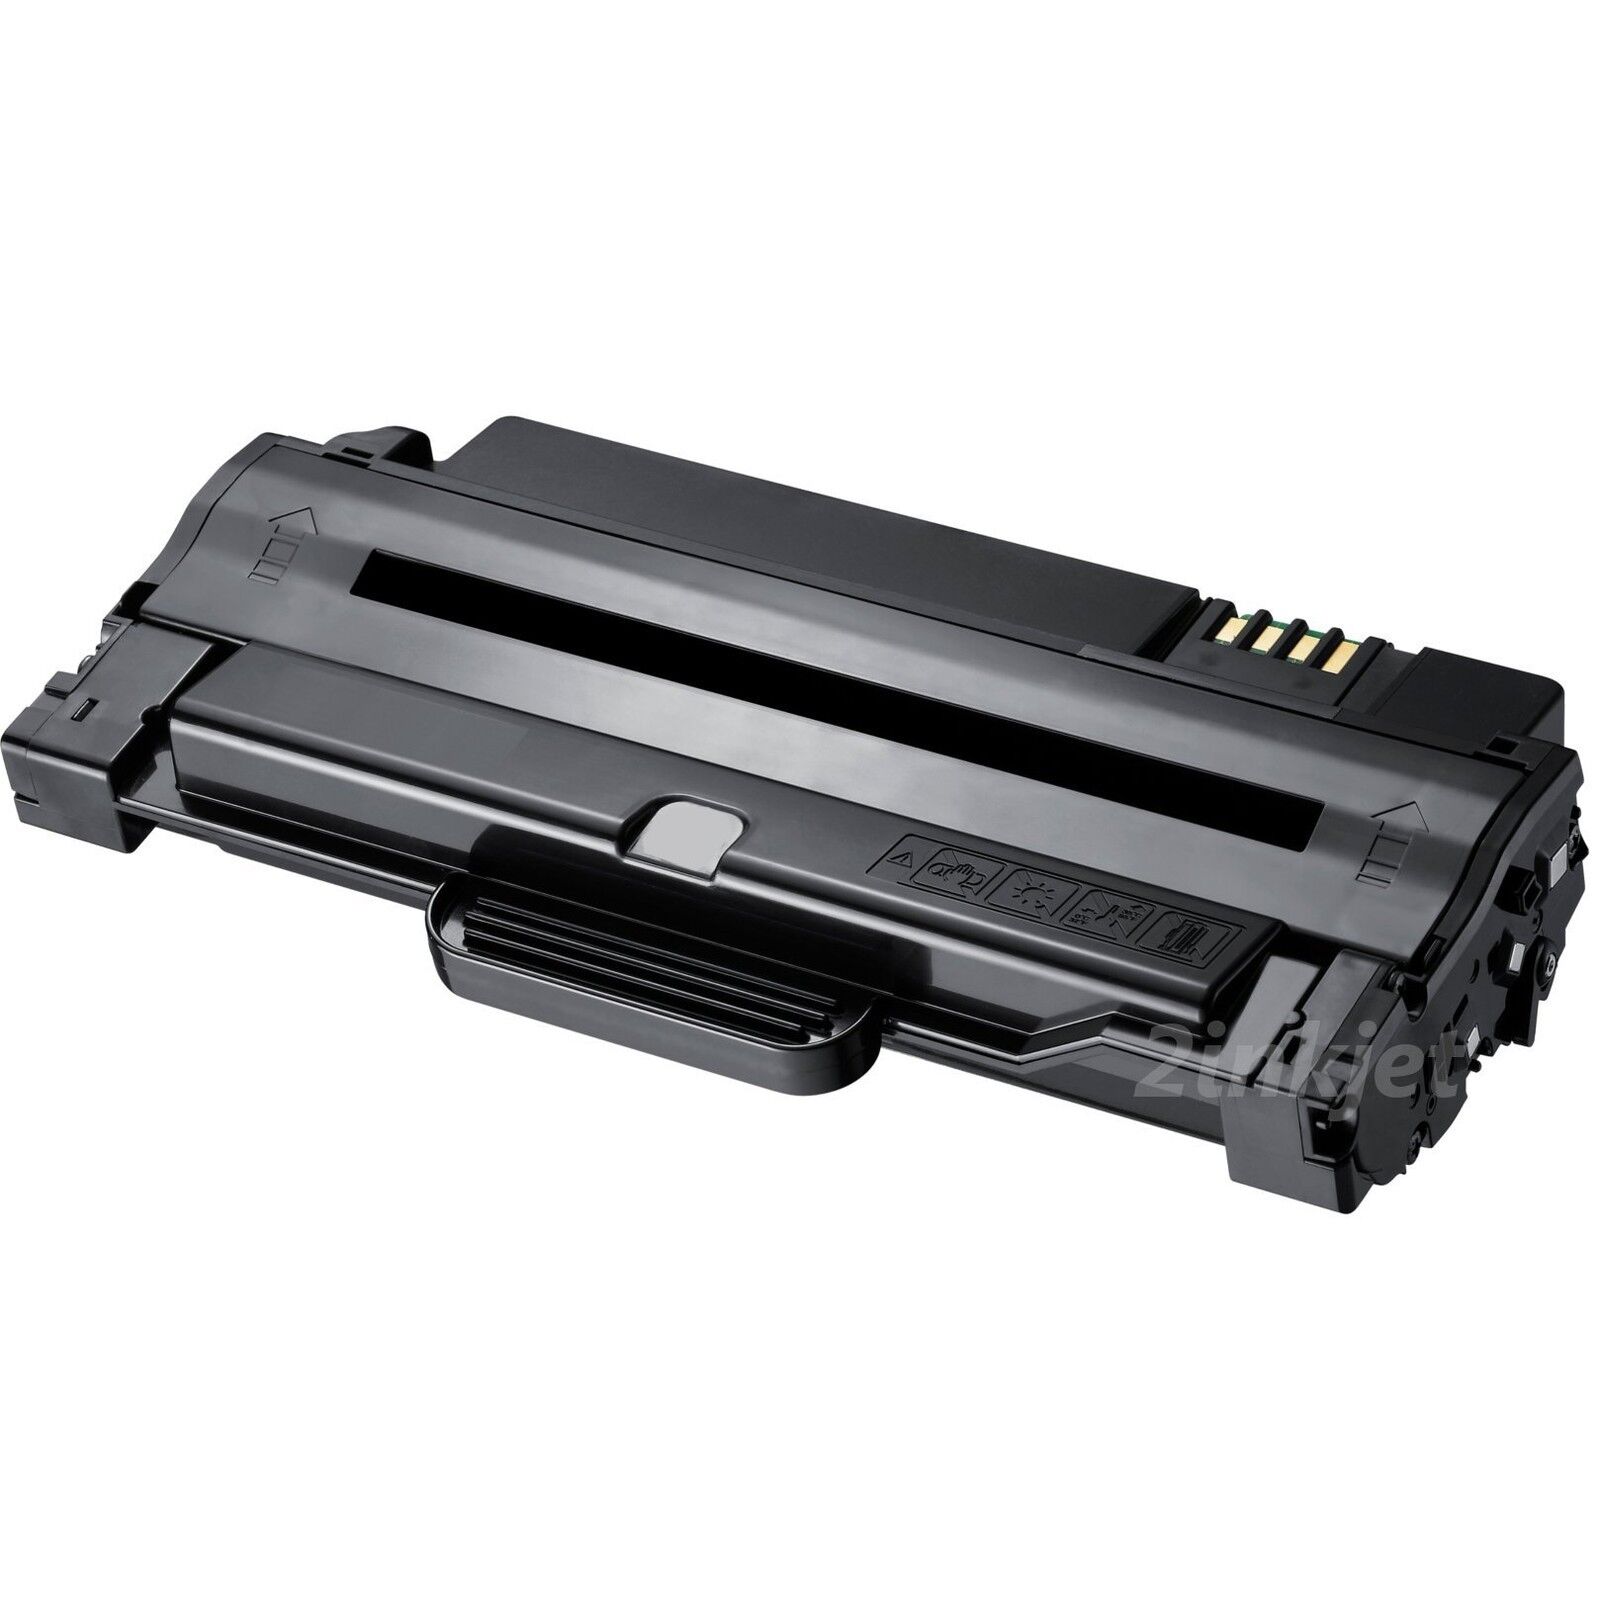 330-9523 BLACK Toner Cartridge for Dell 1130 1130n 1133 1135n 7H53W